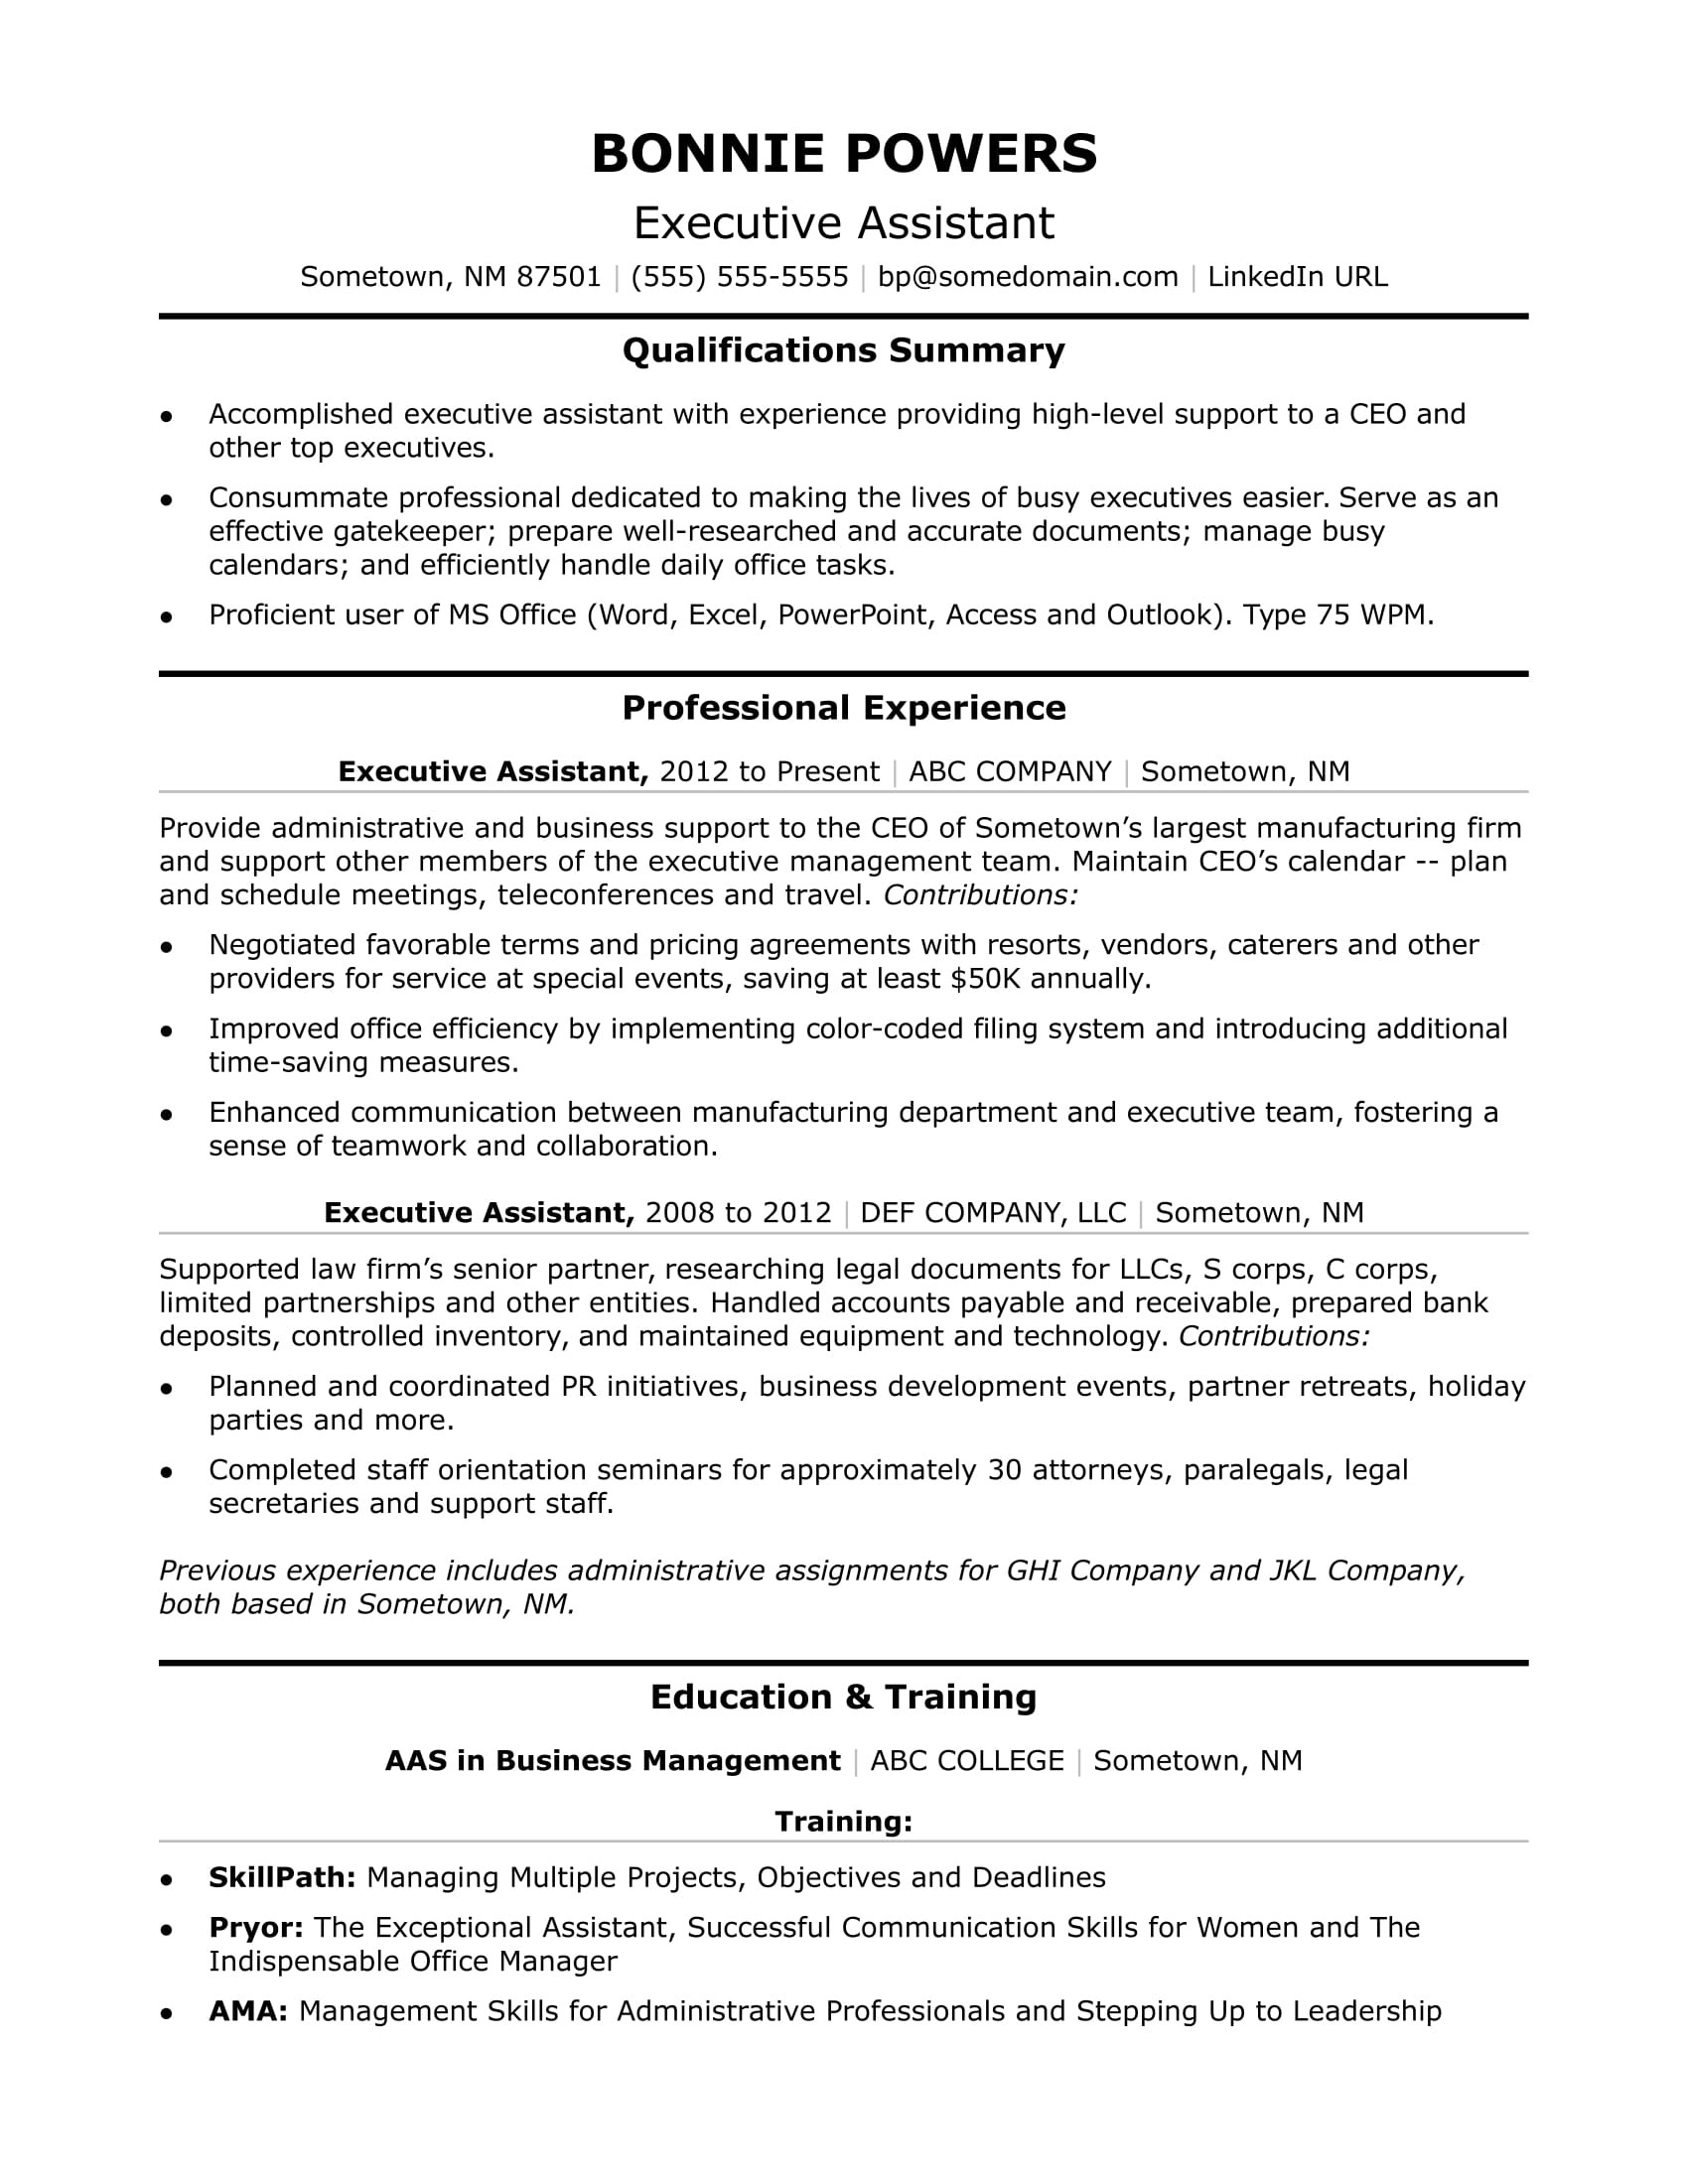 Entry Level Business Administration Resume Sample Executive Administrative assistant Resume Sample Monster.com